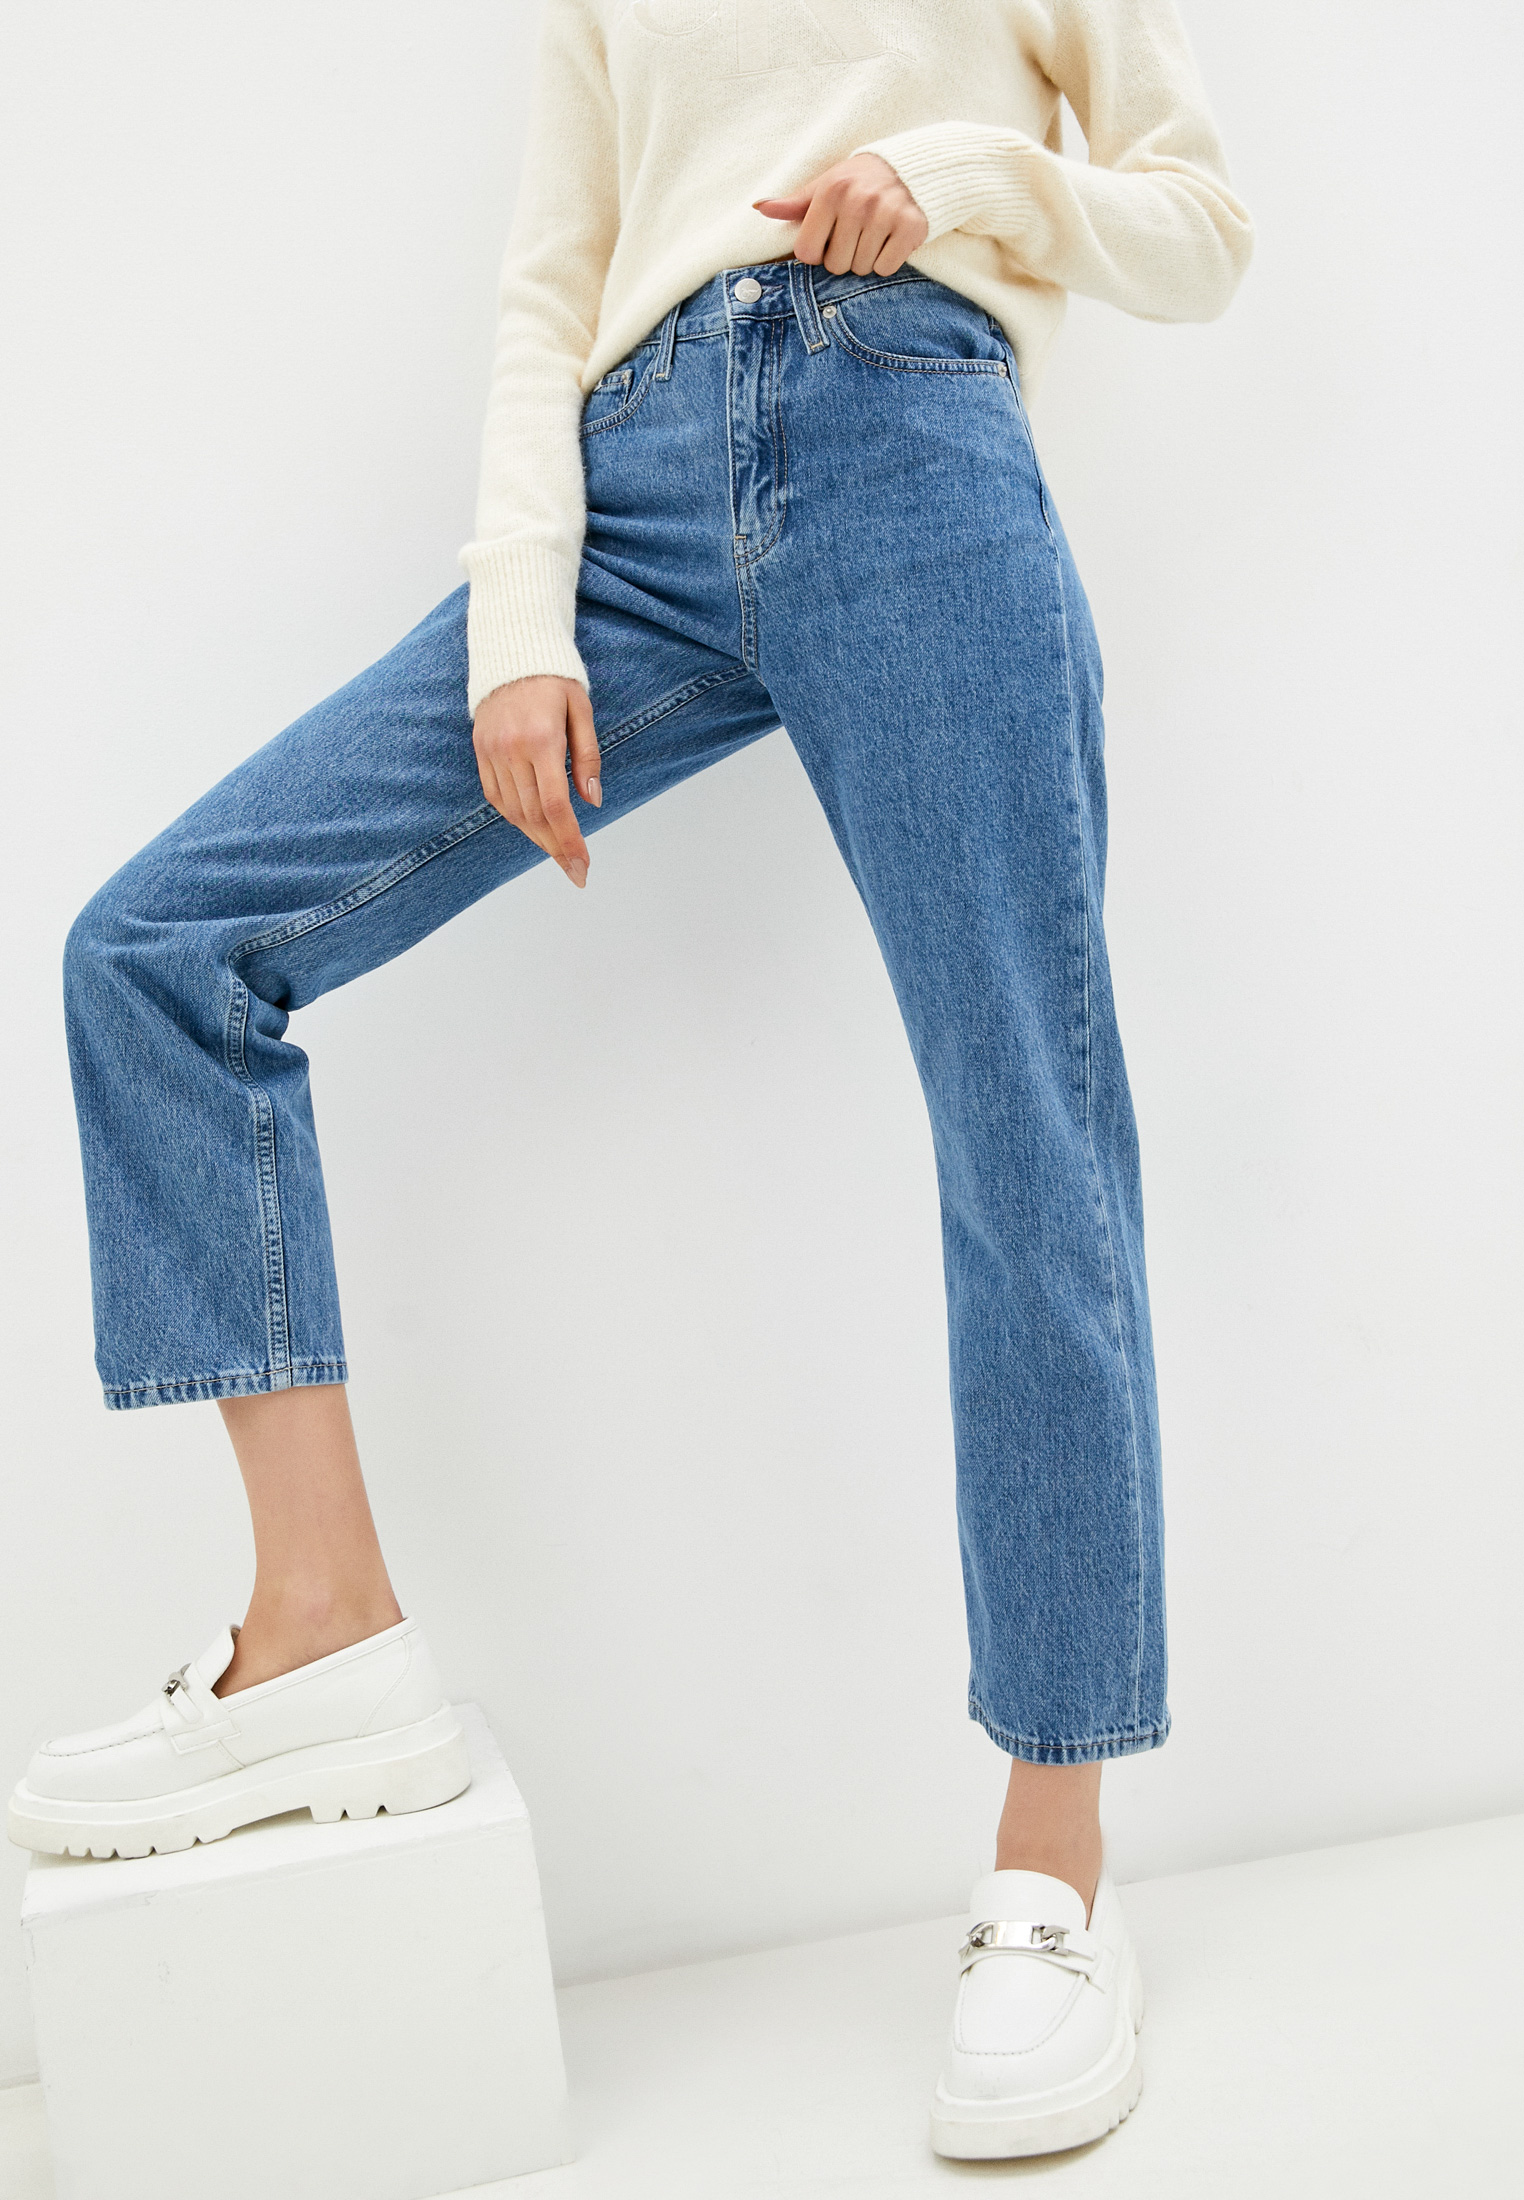 Джинсы Calvin Klein Jeans HR STRAIGHT ANKLE, цвет: синий, RTLAAP812901 — купить в интернет-магазине Lamoda